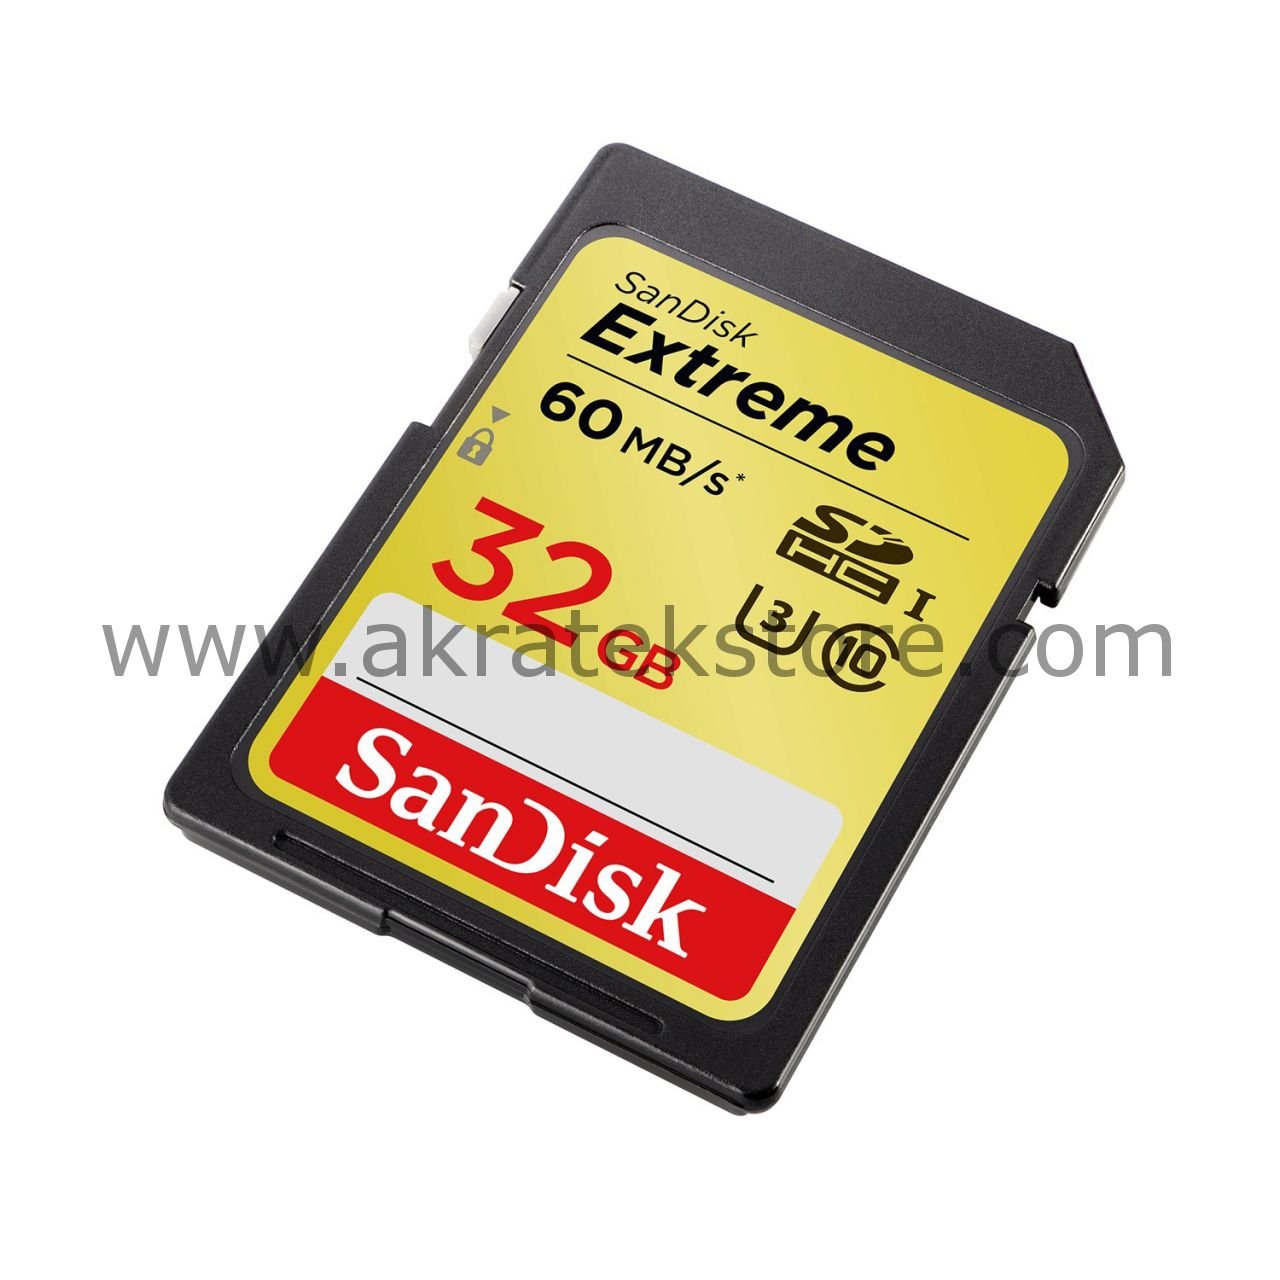 Sandisk 32GB Extreme